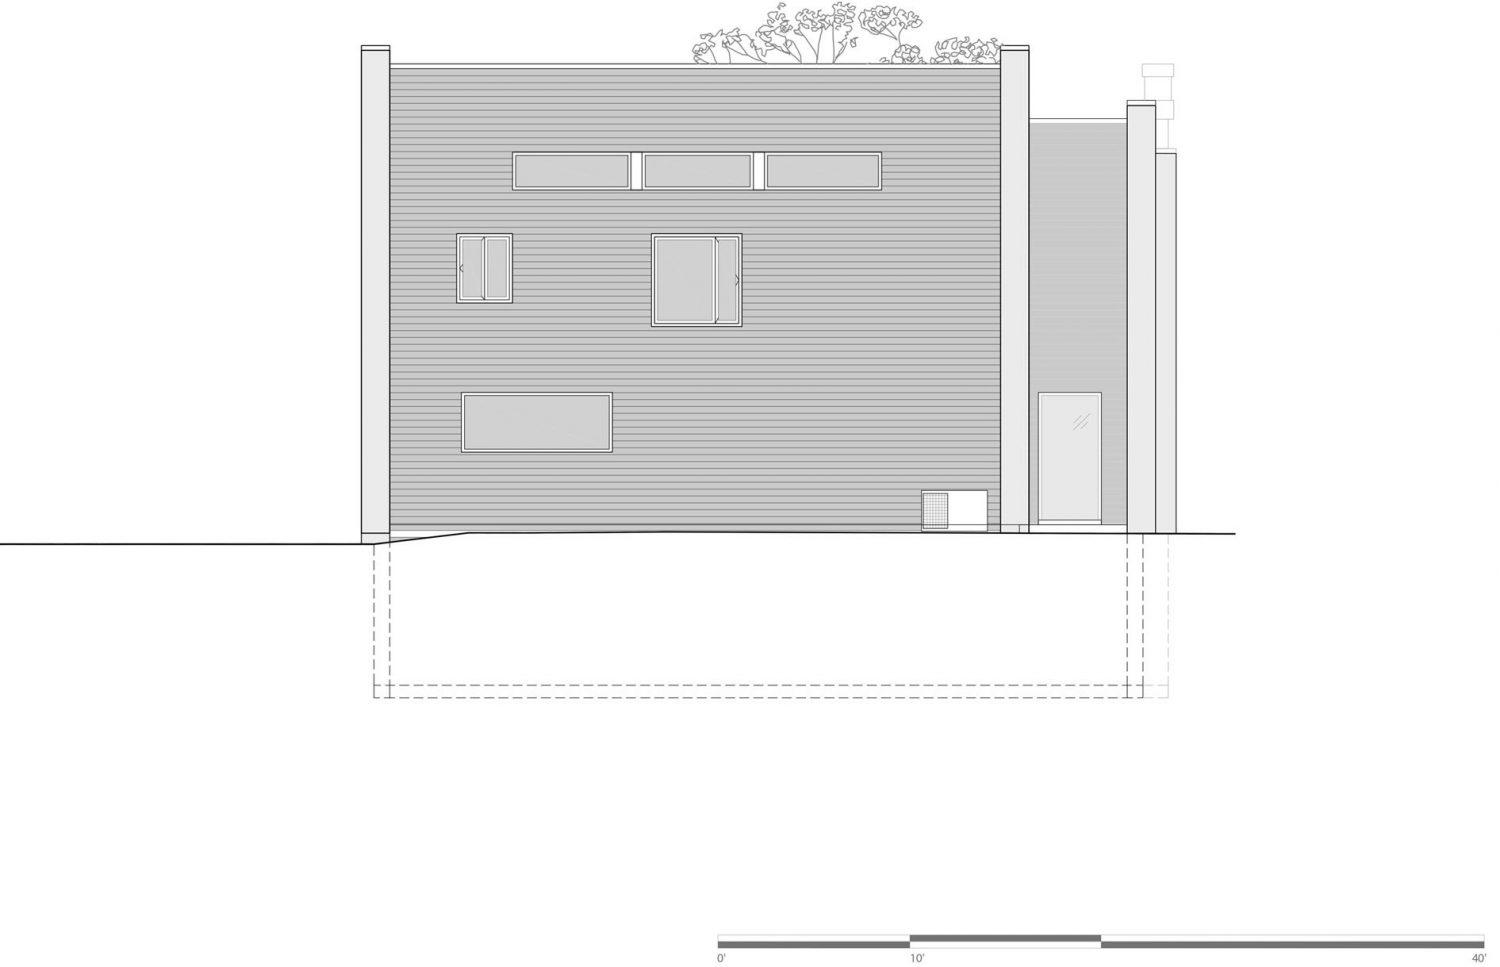 Residence Maribou by Alain Carle Architecte